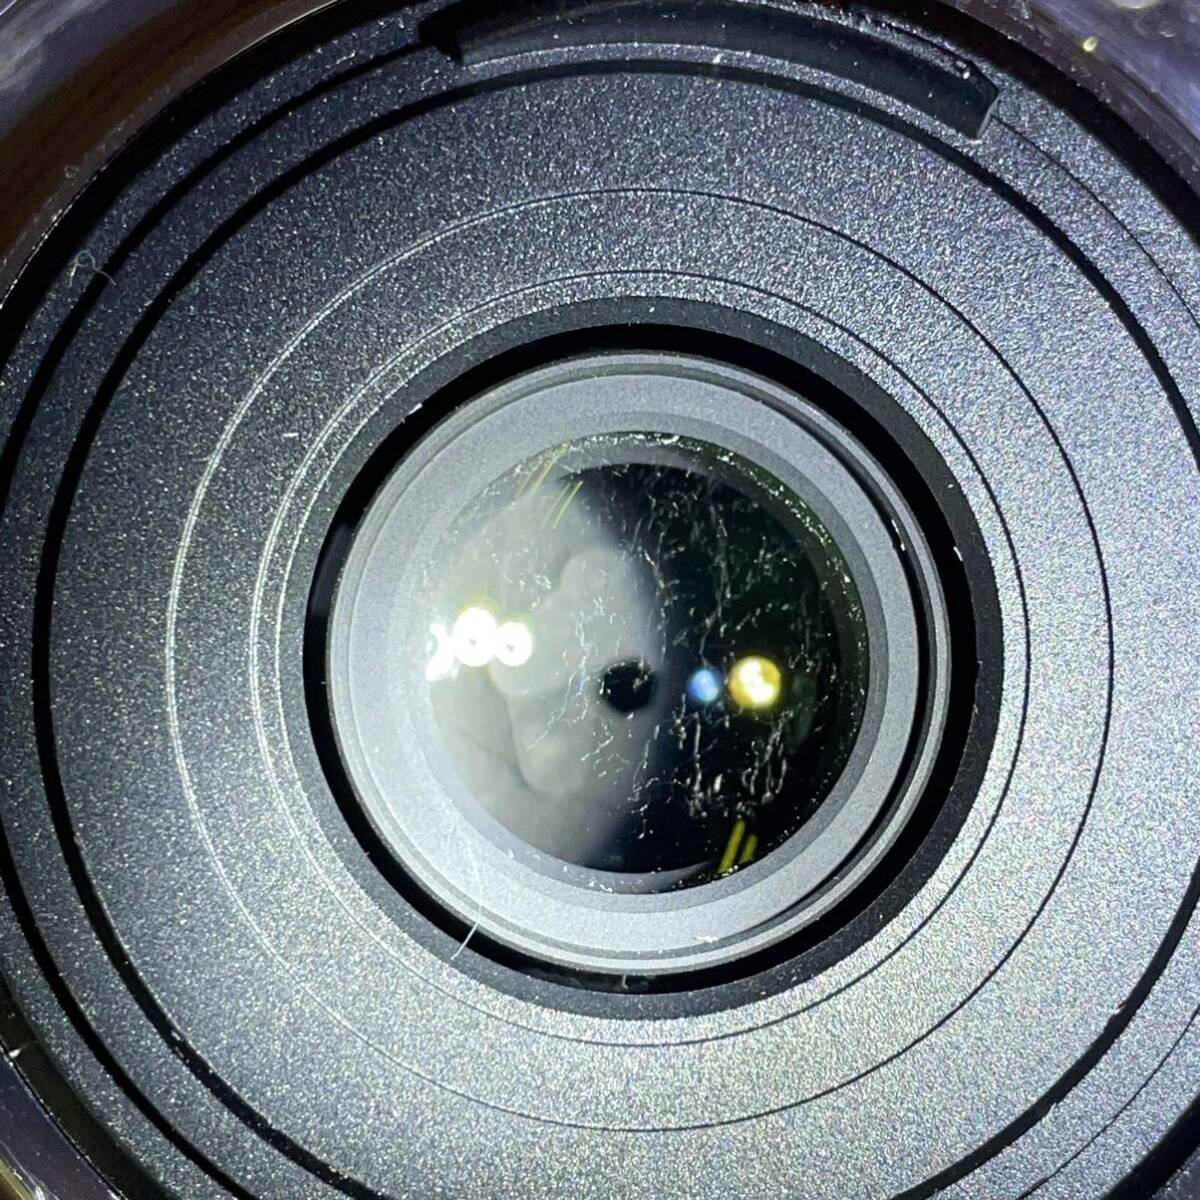 * PENTAX smc PENTAX-DA FISH-EYE F3.5-4.5 10-17mm ED(IF) camera lens fish I fish eye AF operation verification settled Pentax 